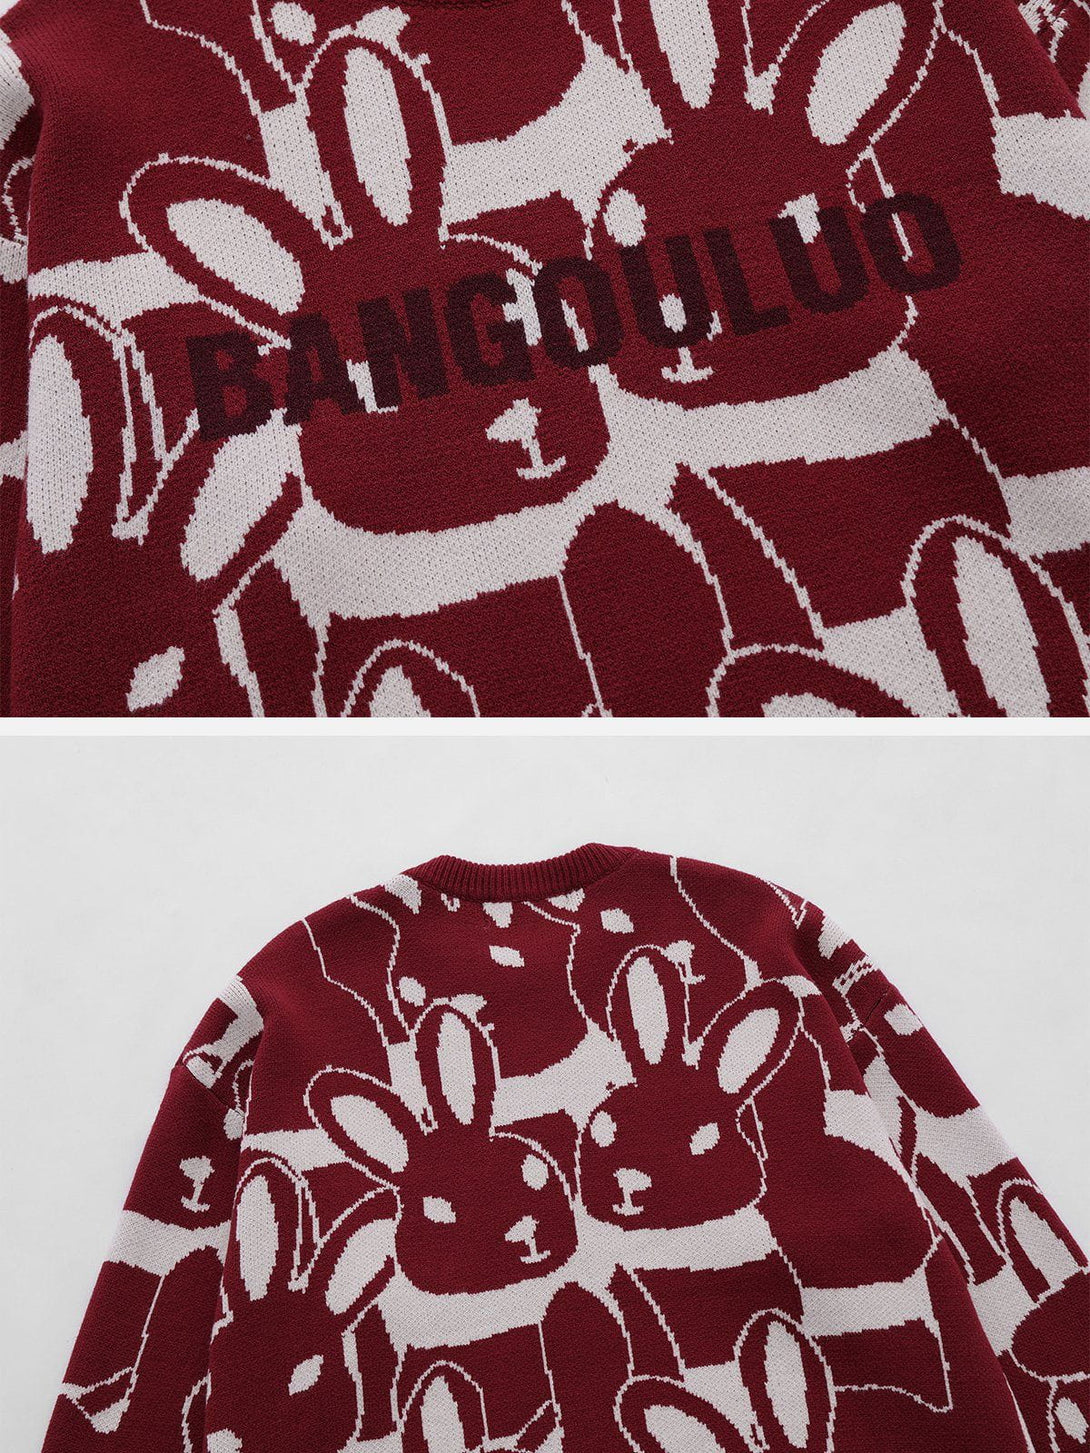 Levefly - Full Rabbit Jacquard Knit Sweater - Streetwear Fashion - levefly.com